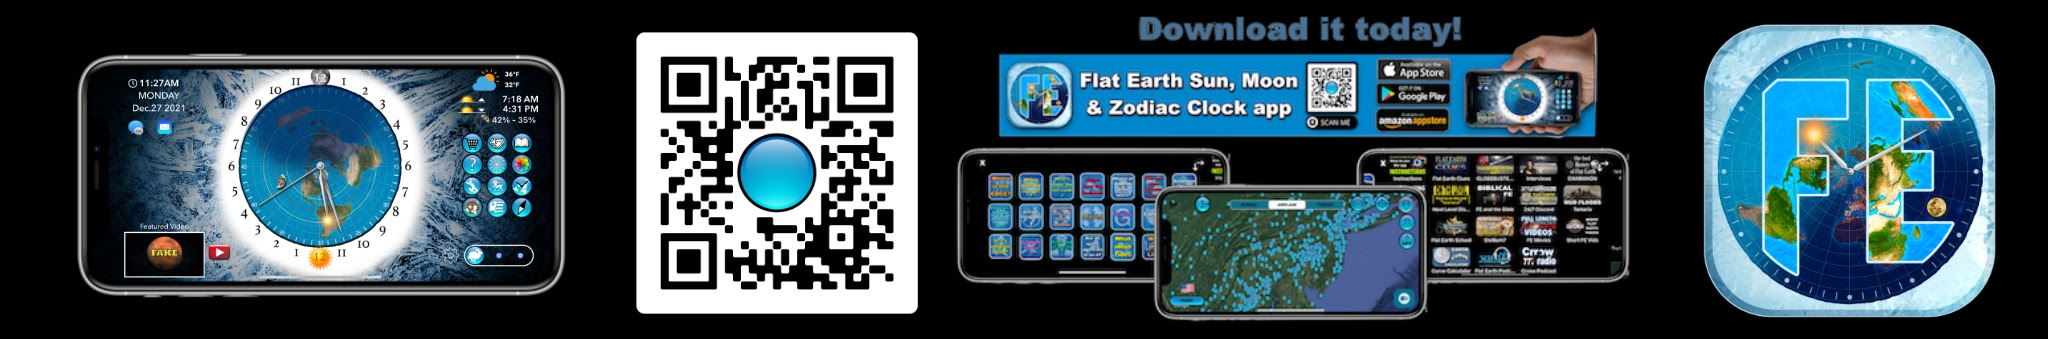 Flat Earth Sun, Moon & Zodiac Clock app banner